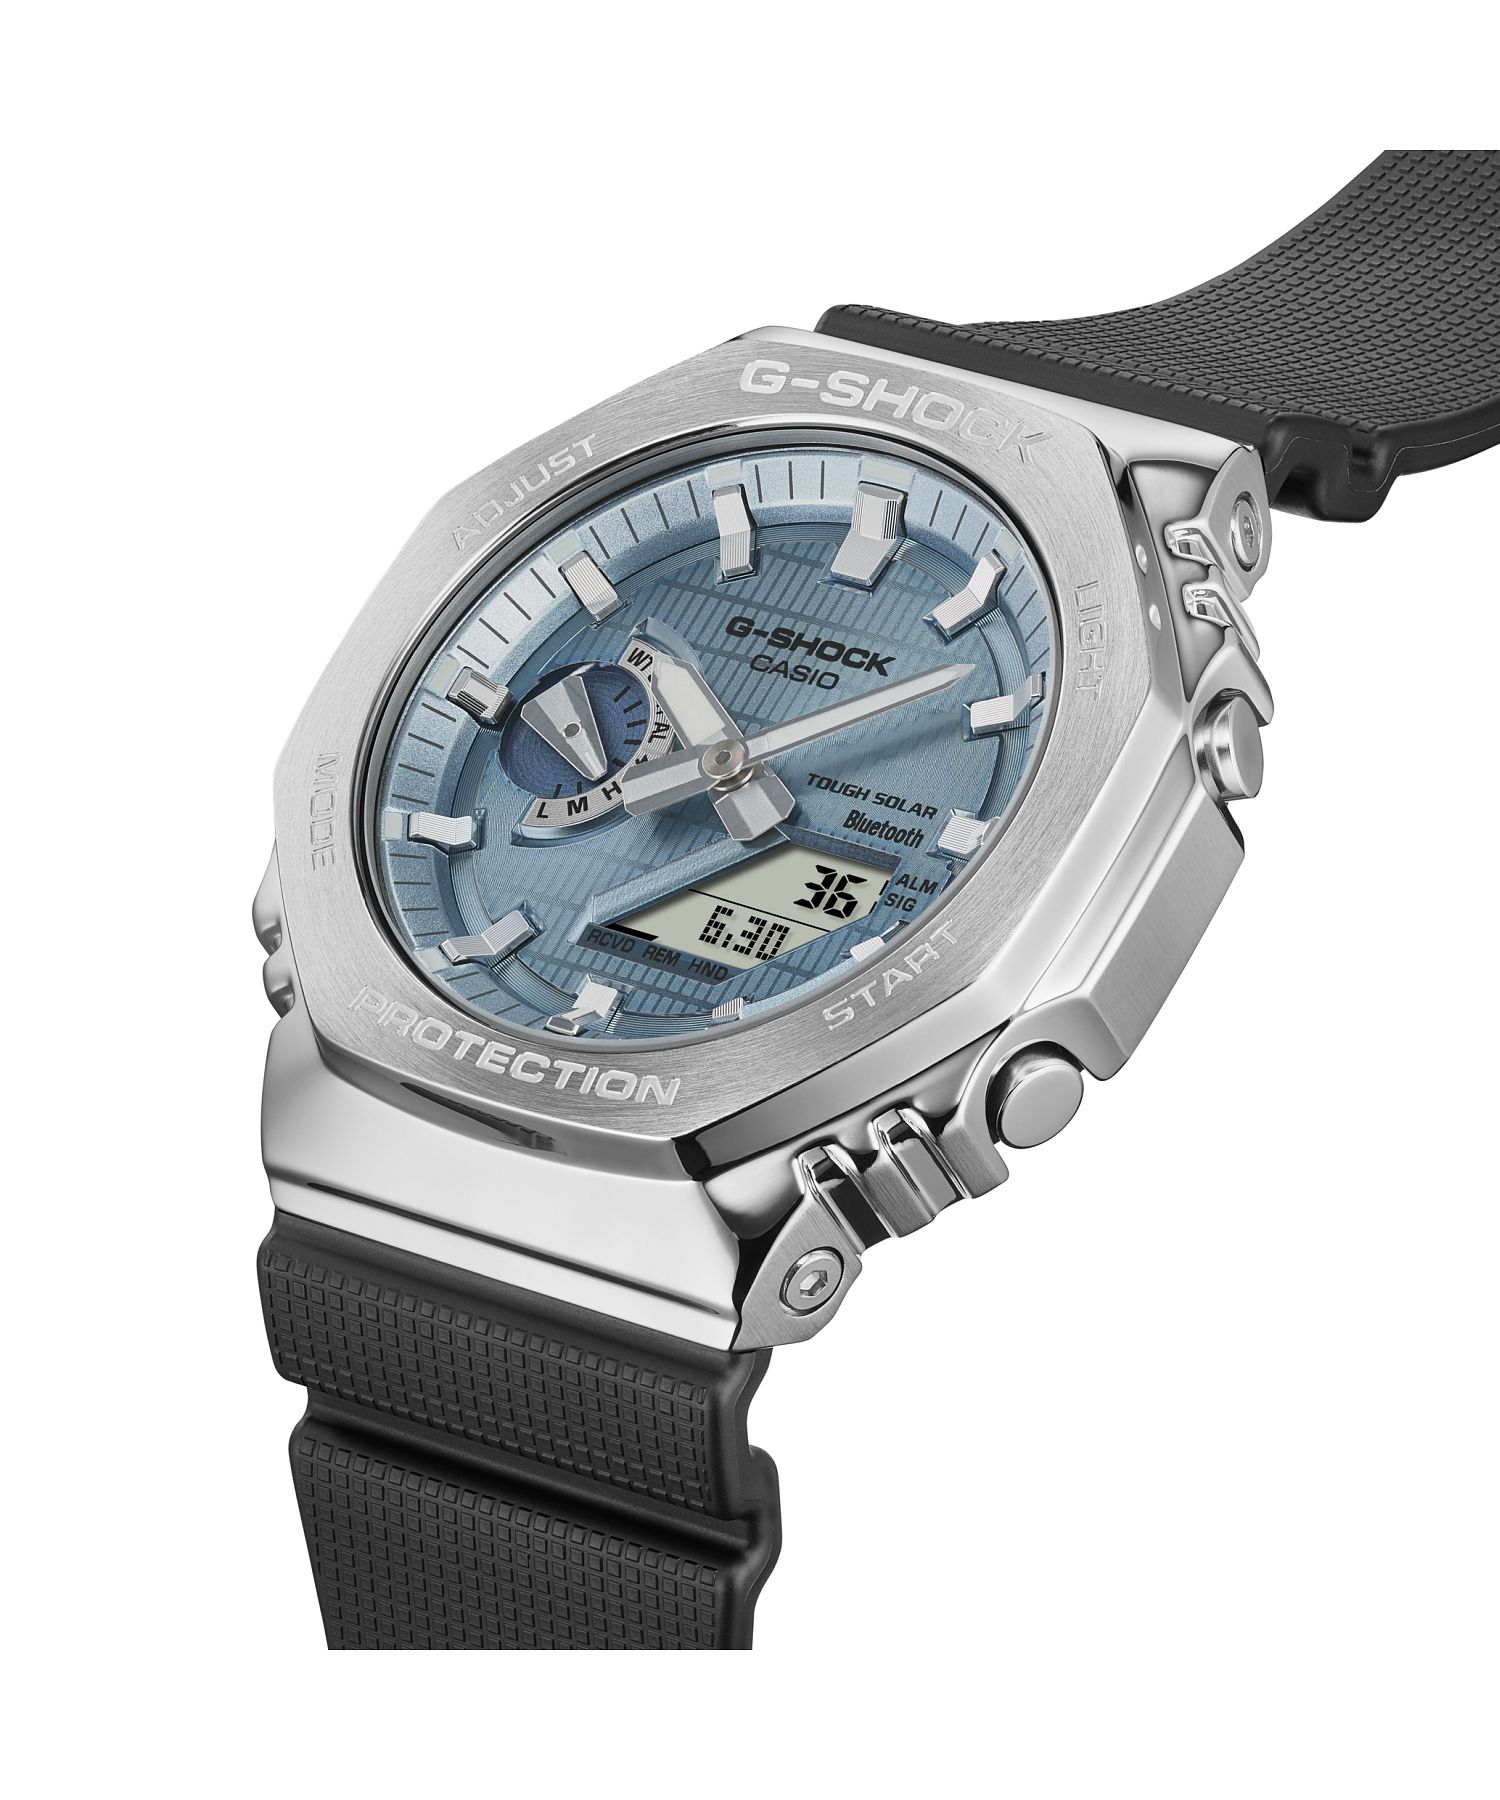 GBM－2100A－1A2JF カシオ CASIO G－SHOCK ジーショック Gショック 腕時計 (506315074) | CASIO(CASIO)  - MAGASEEK